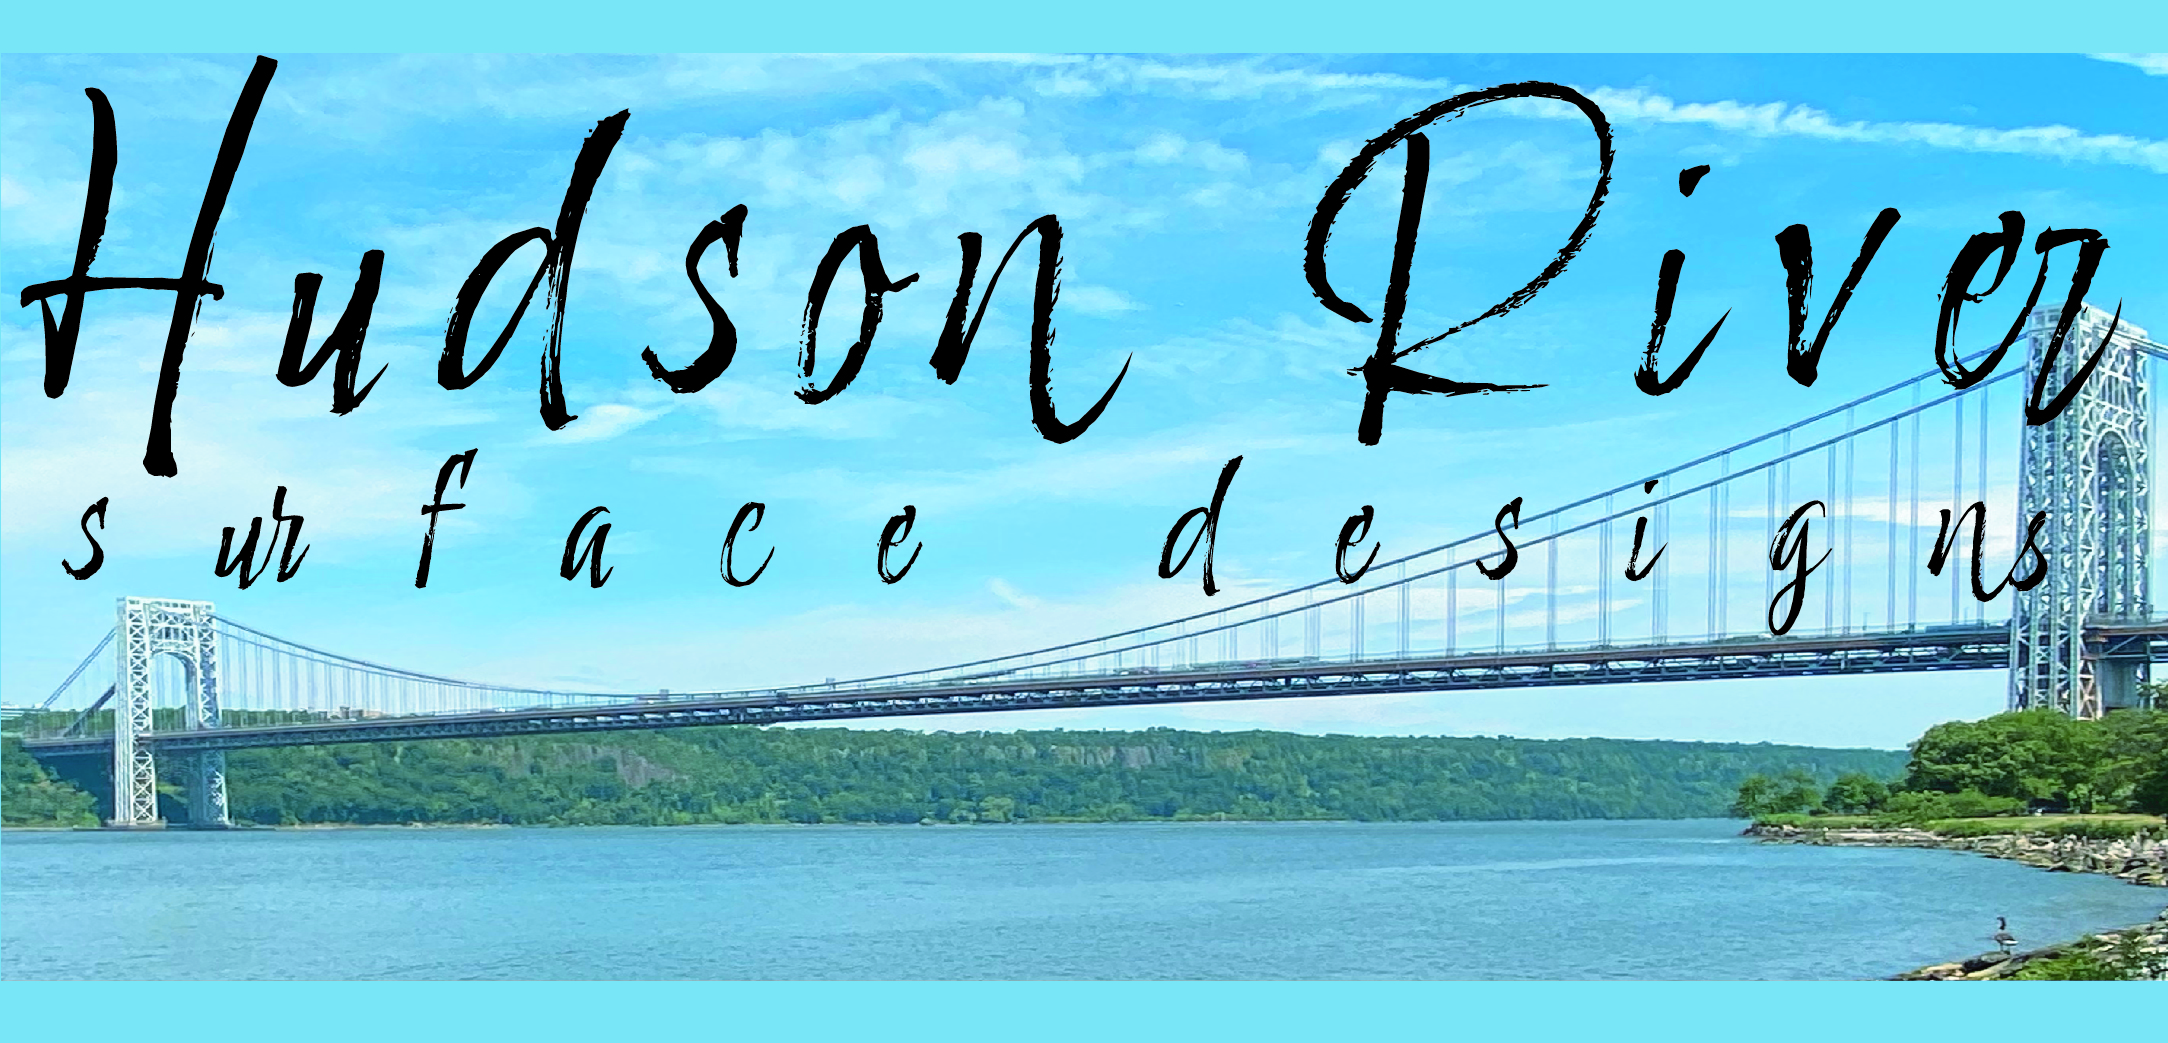 Hudson River Surface Designs